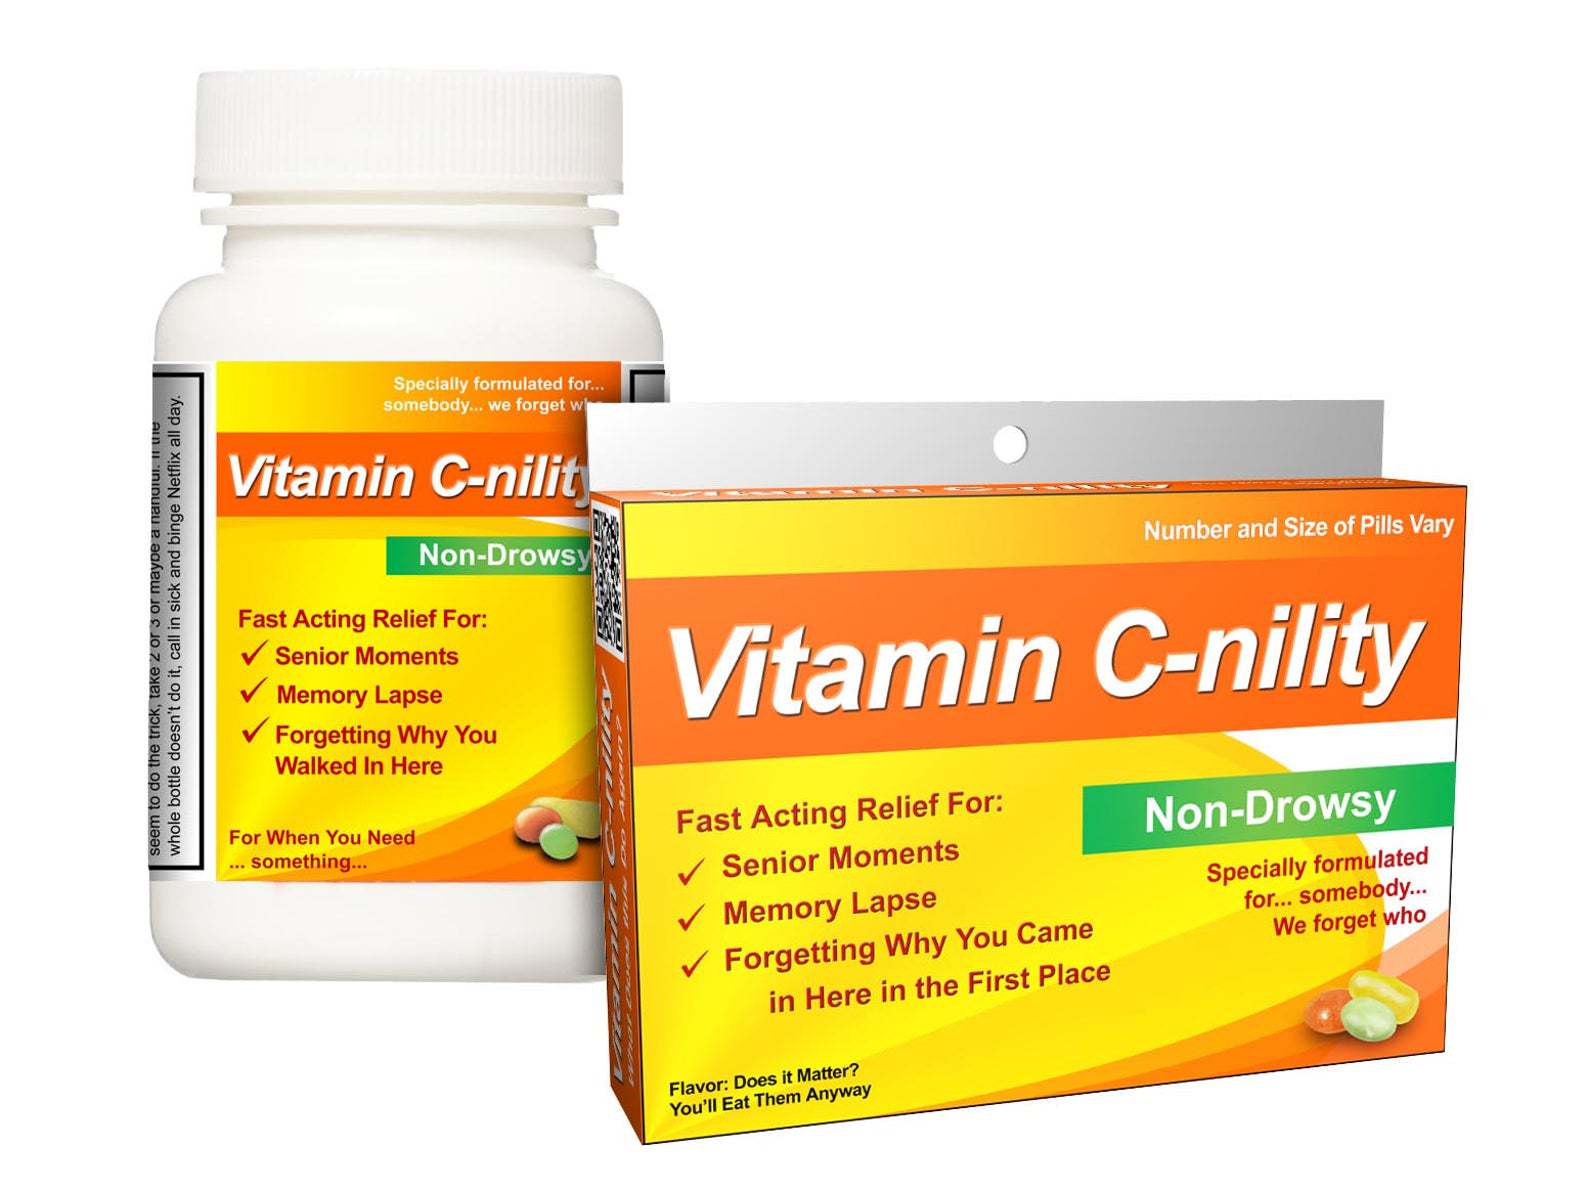 Vitamin C-nitlity